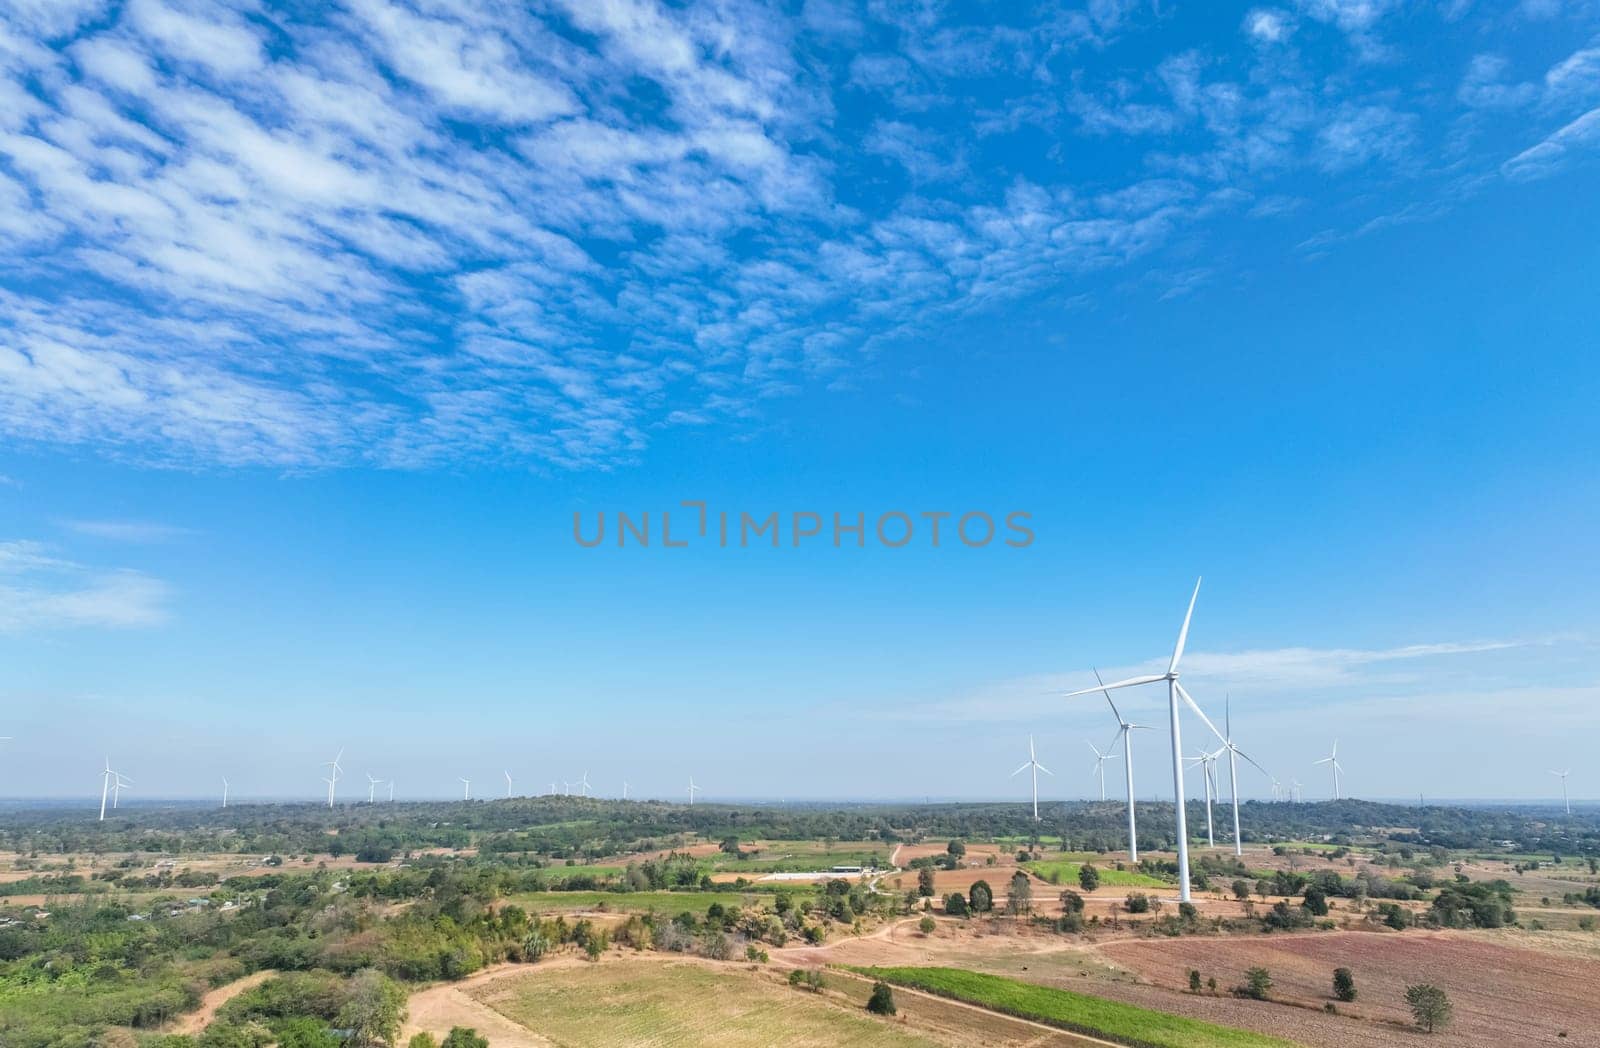 Landscape of wind farm. Wind energy. Wind power. Sustainable, renewable energy. Wind turbines generate electricity. Sustainable development. Green technology for energy sustainability. Green energy. by Fahroni